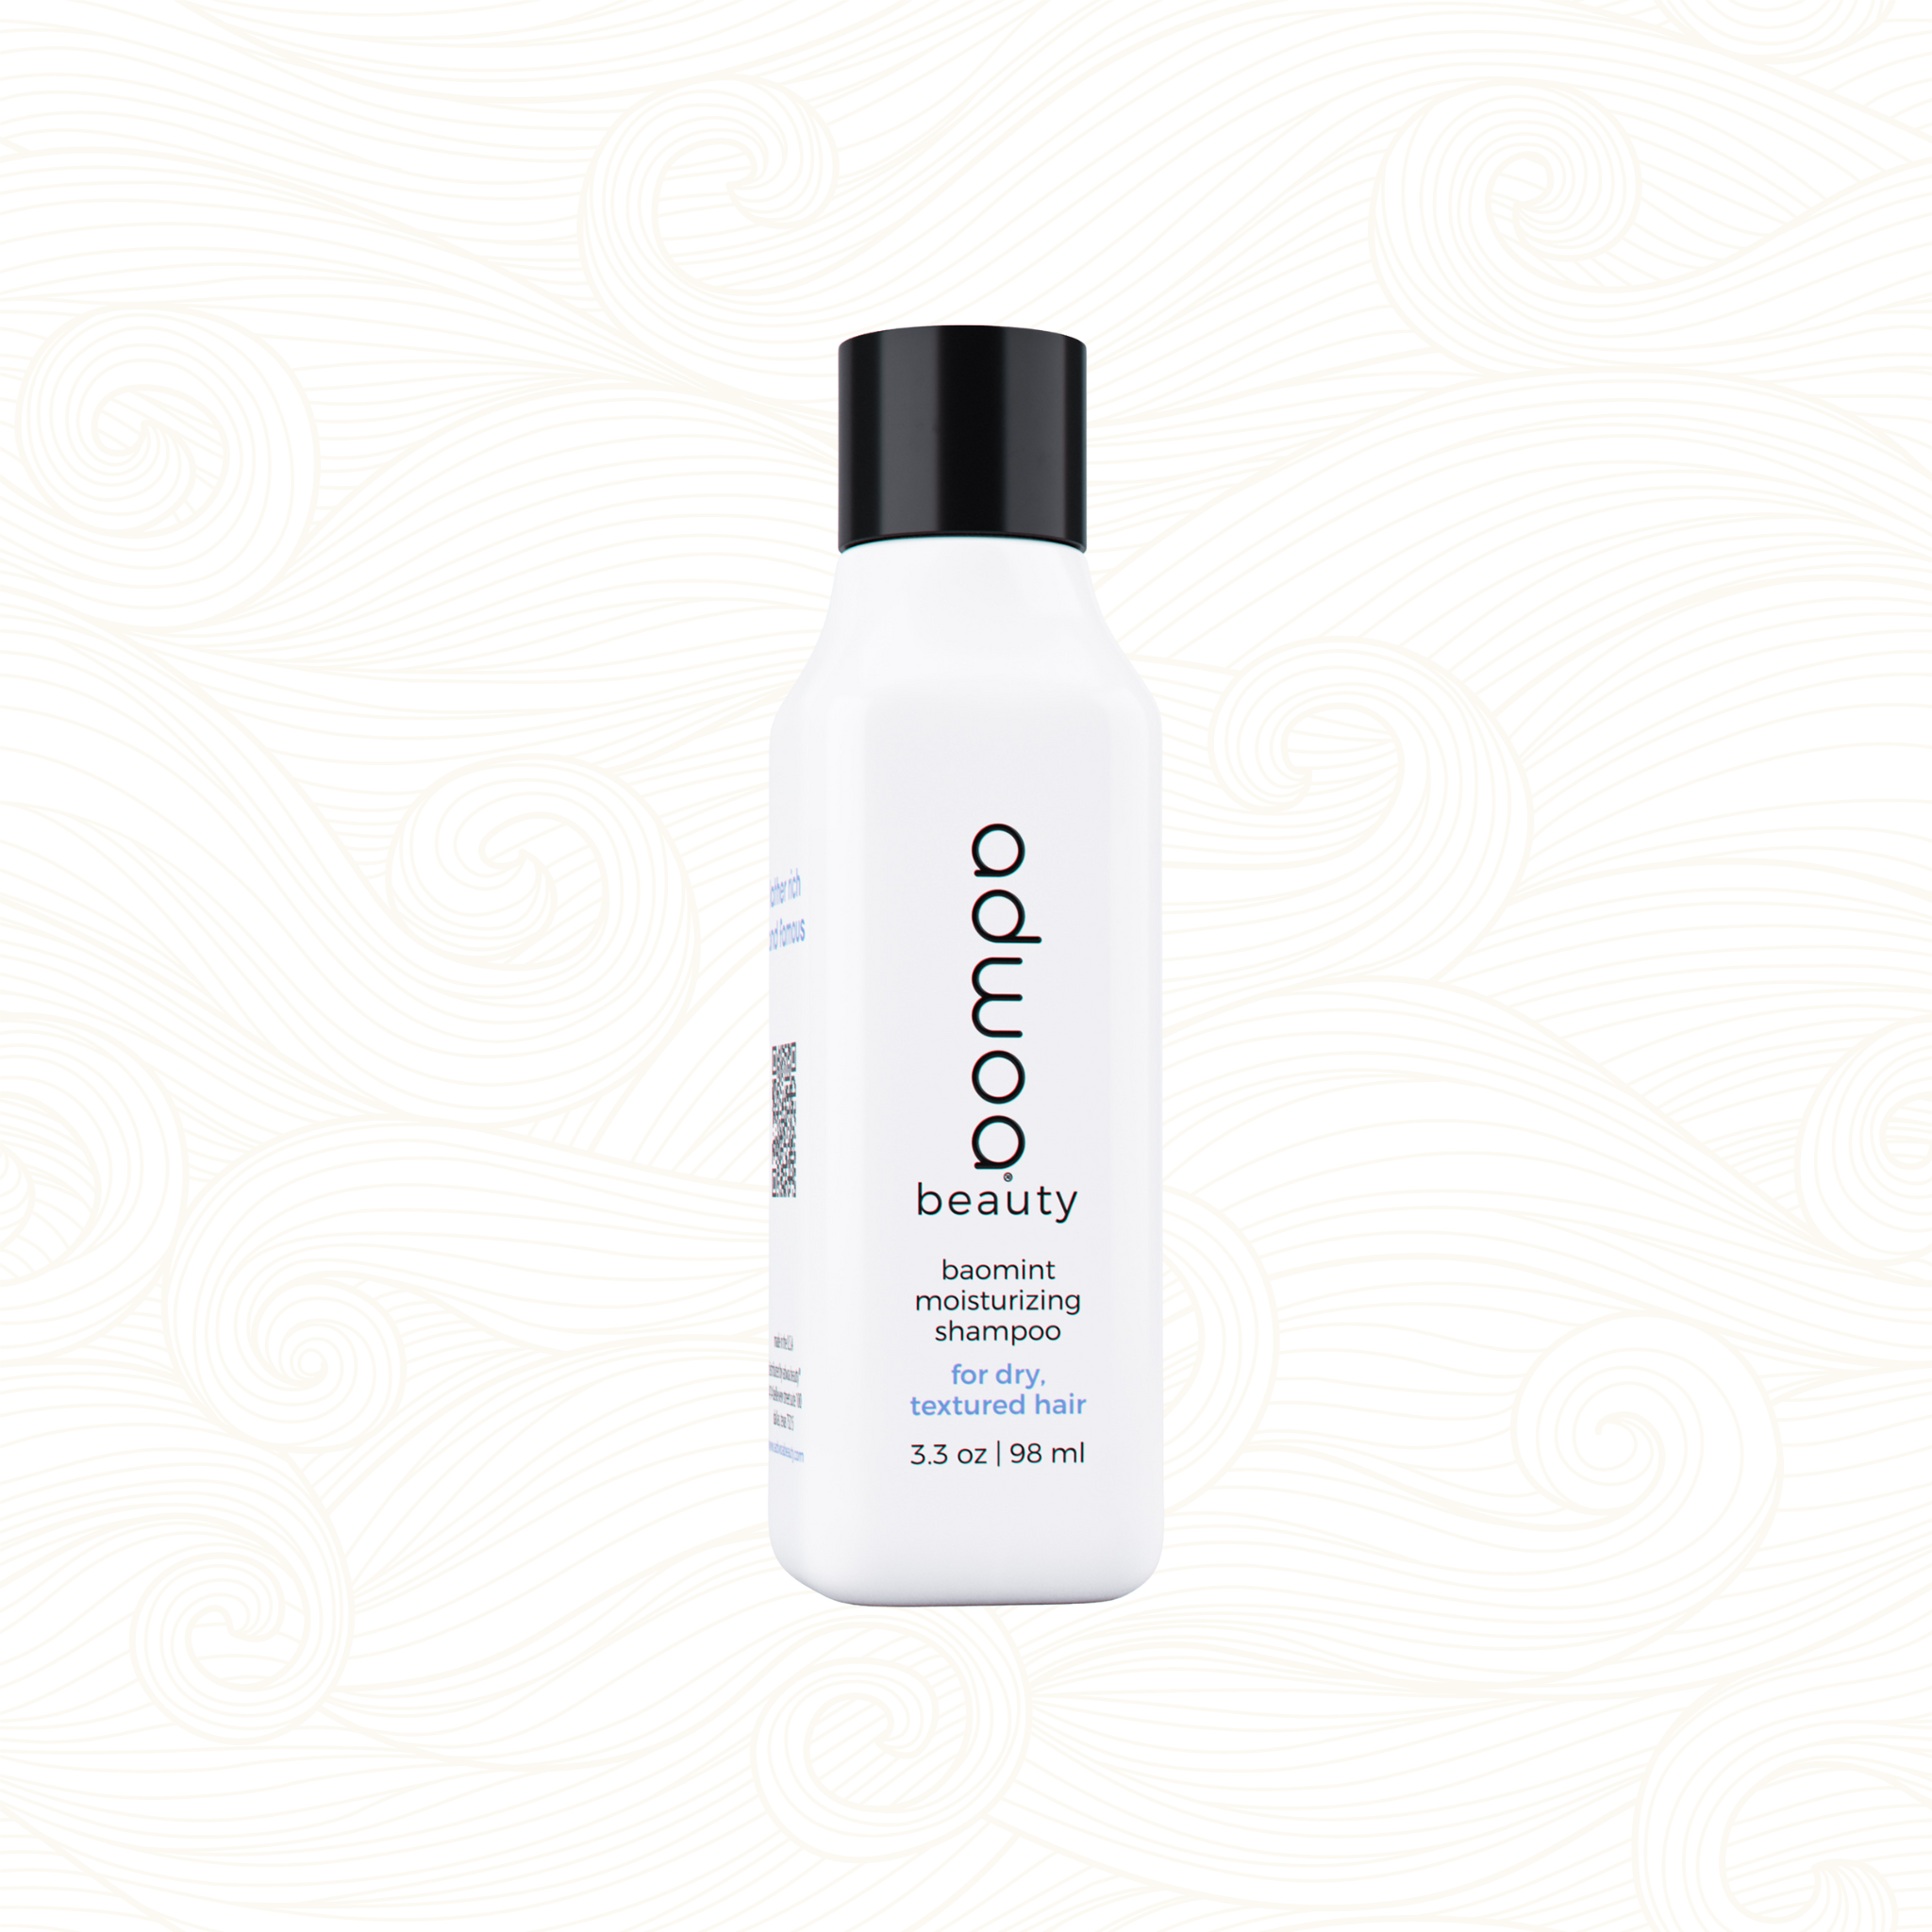 Adwoa Beauty | Baomint™ Moisturizing Shampoo / 98 ml Shampoo Adwoa Beauty